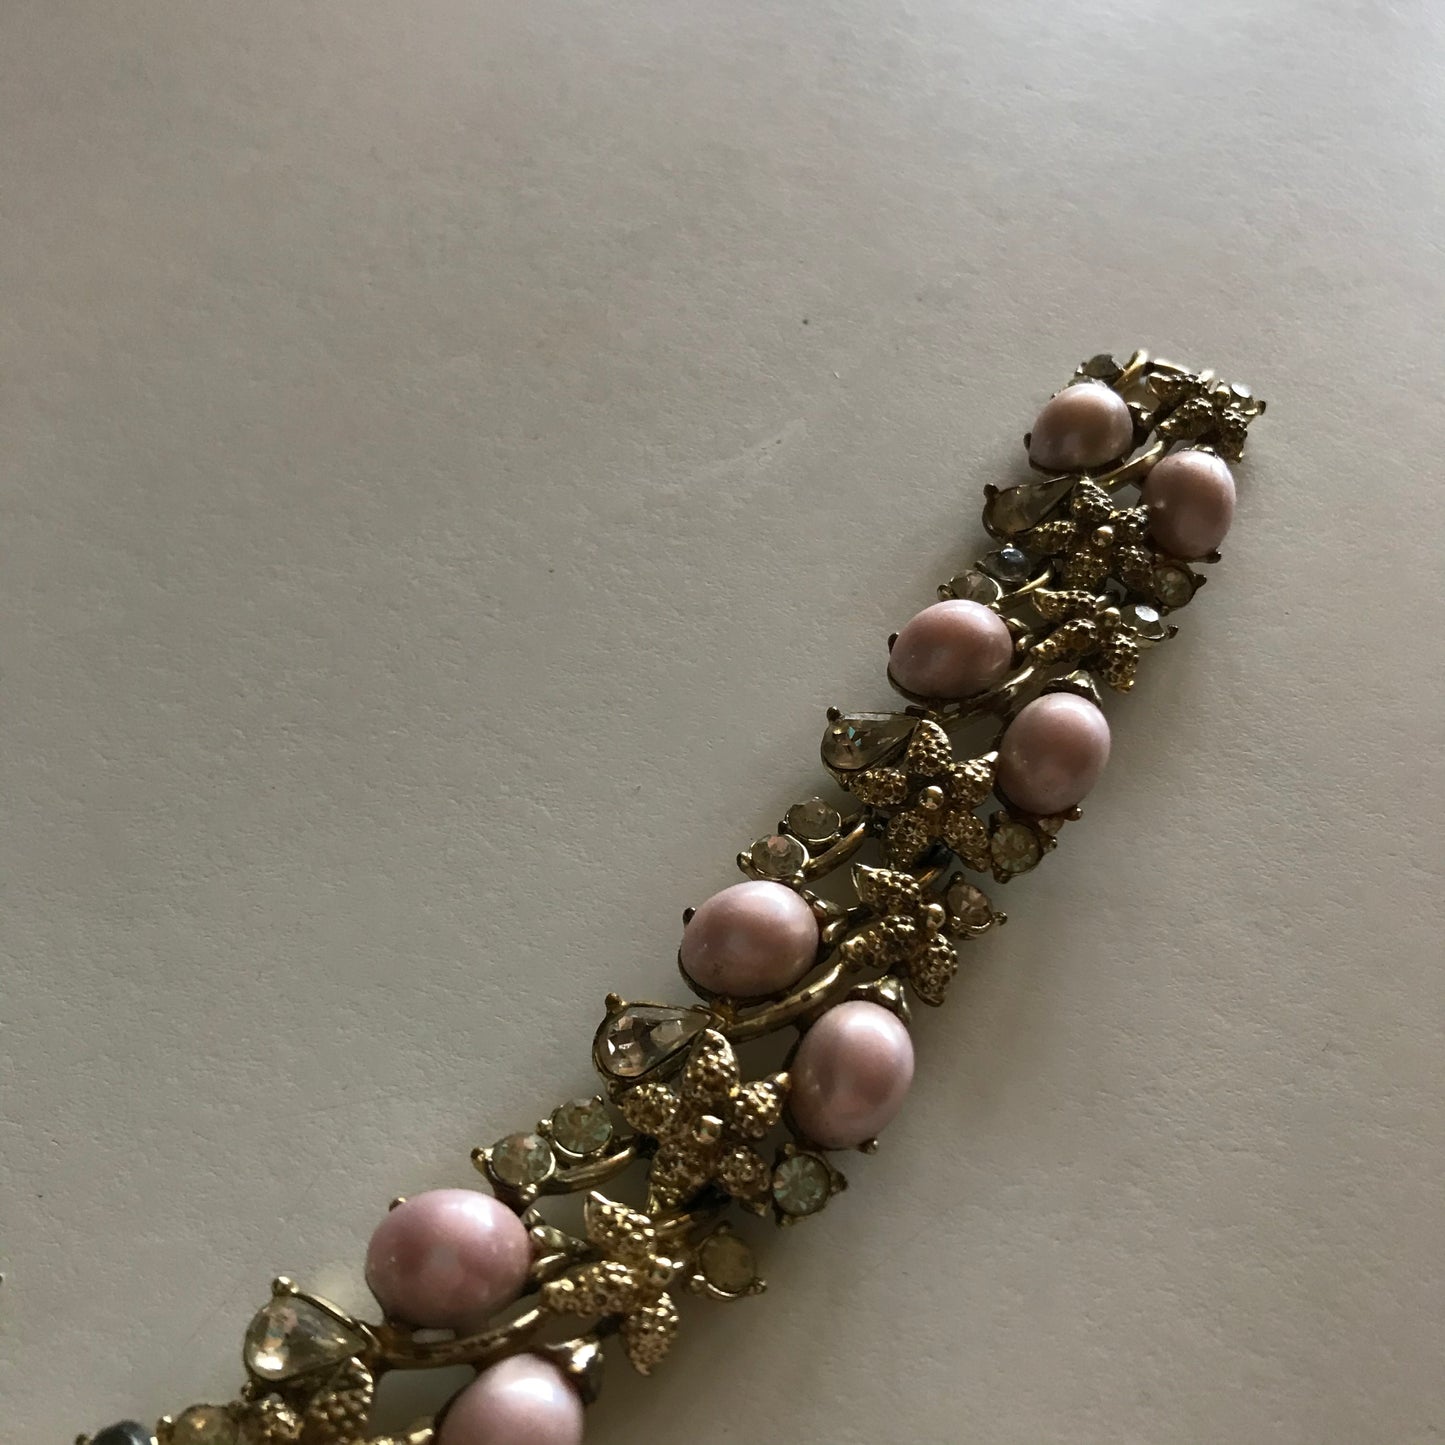 Pink Faux Baroque Pearls and Rhinestones Silver Tone Metal Bracelet circa 1960s